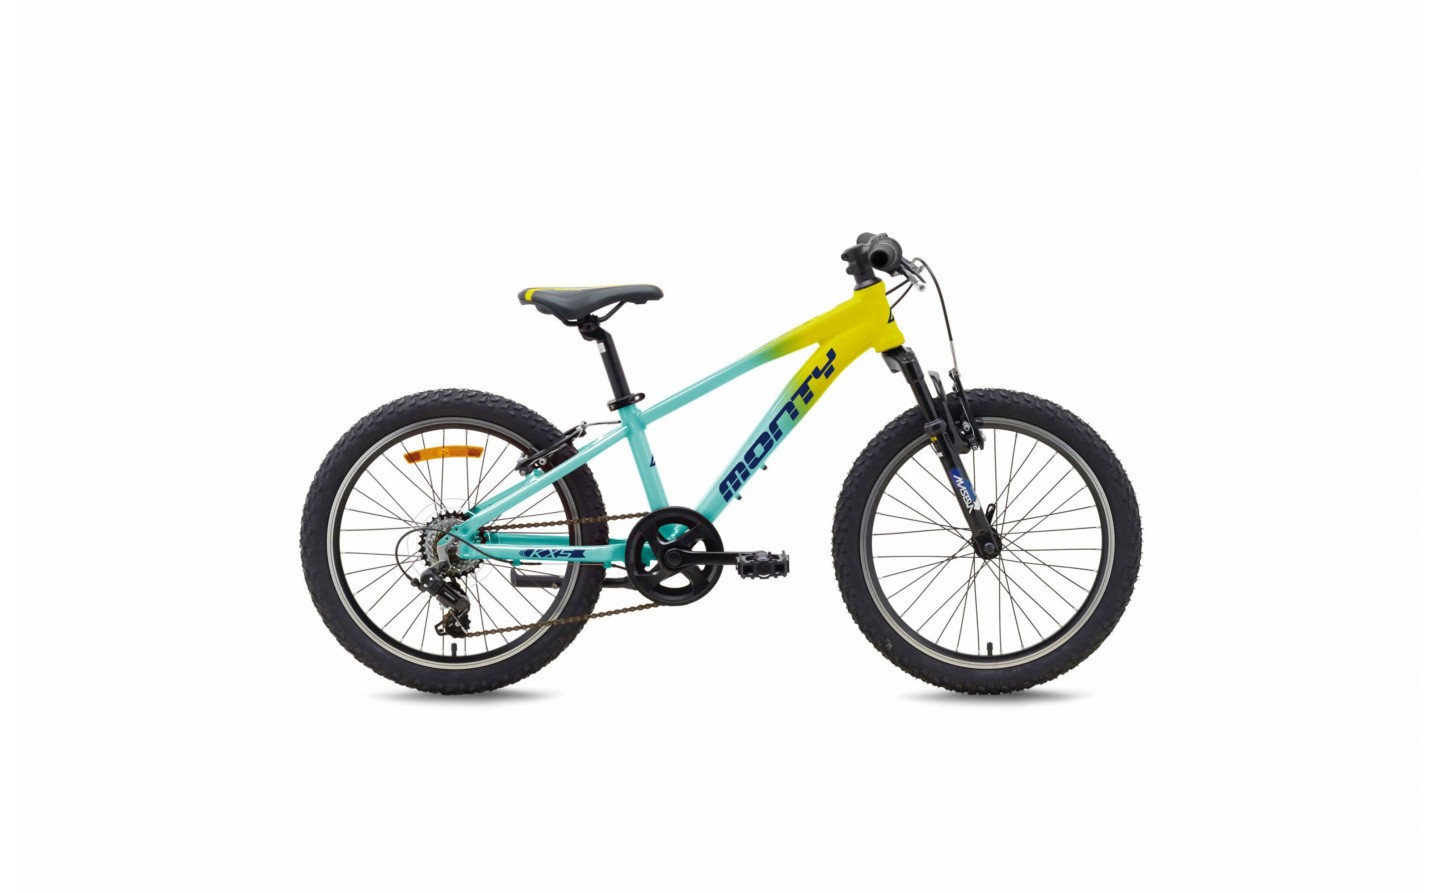 Bicicleta niño Monty 102 (2 a 3 años) 2018 monty 2018 en